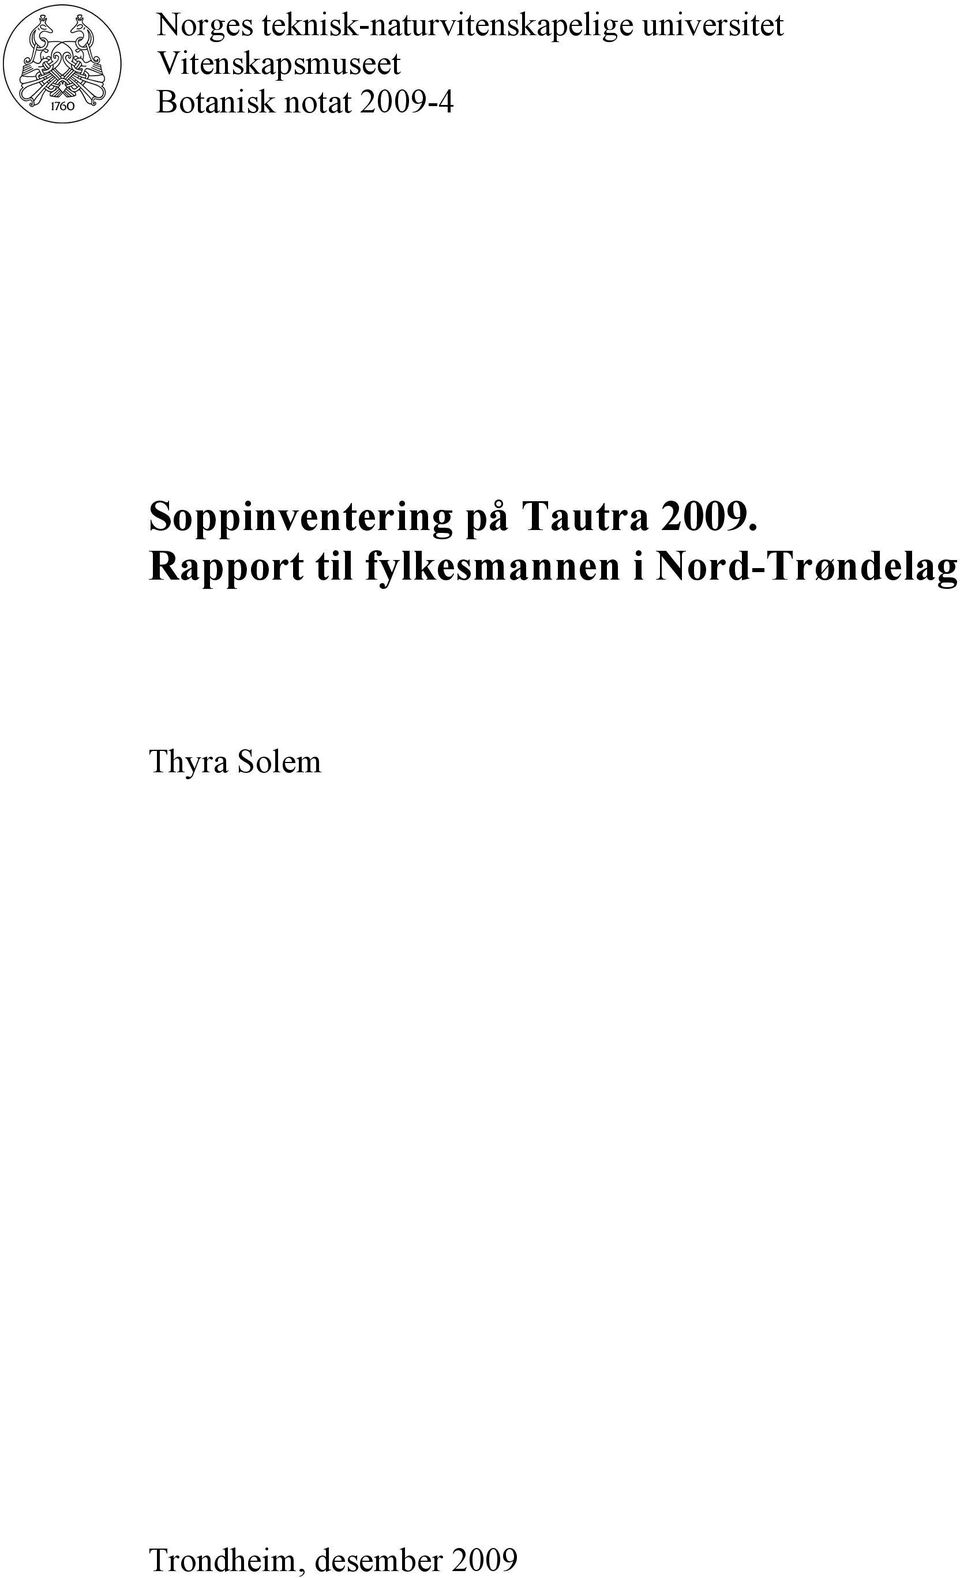 Soppinventering på Tautra 2009.